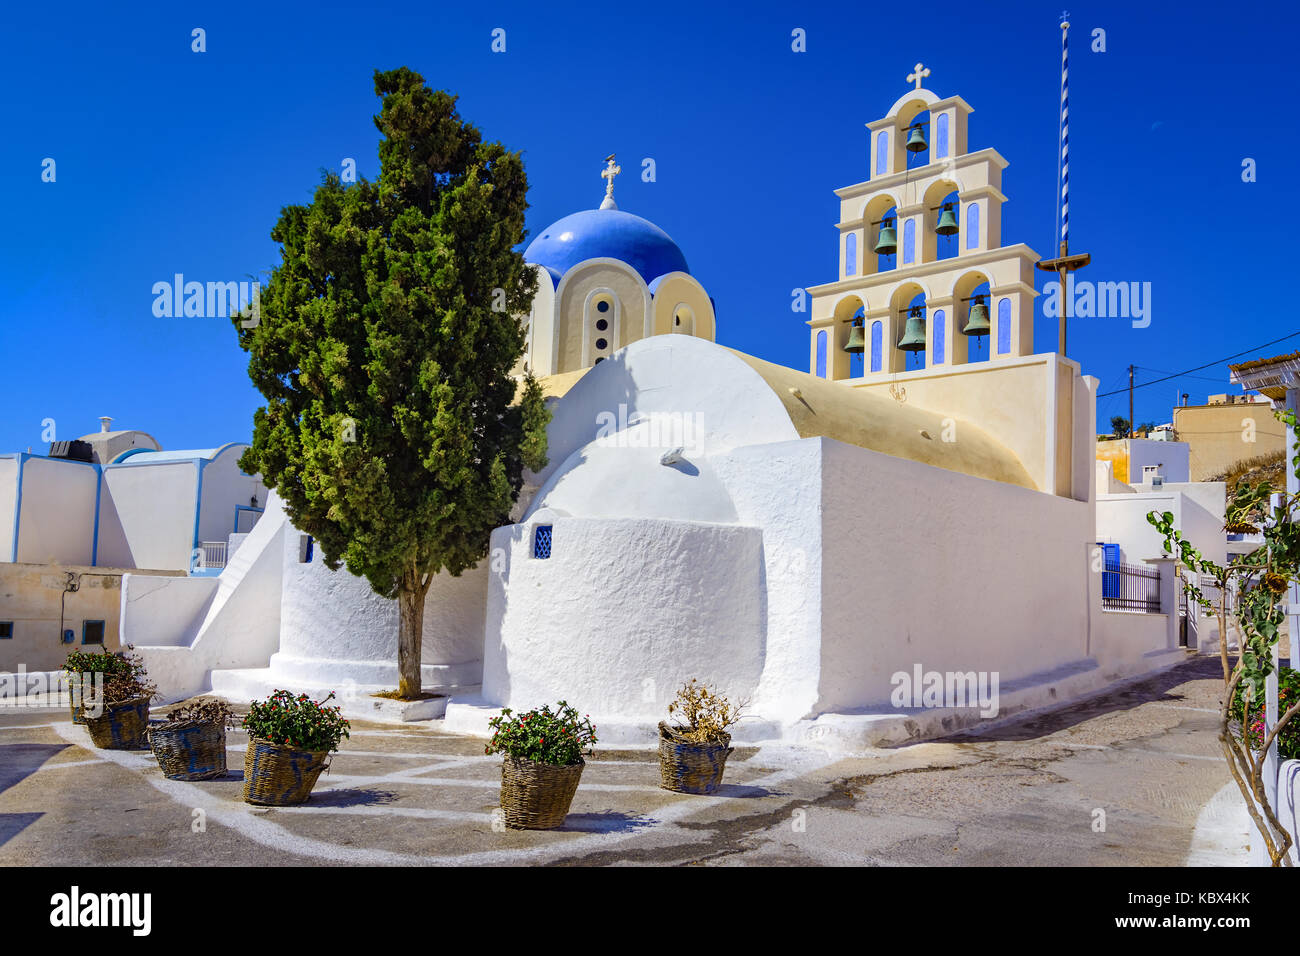 St. epifanios chiesa chiesa cristiana, Akrotiri, Santorini (thira), isole cycaldes, Grecia, mare mediterraneo europa Foto Stock